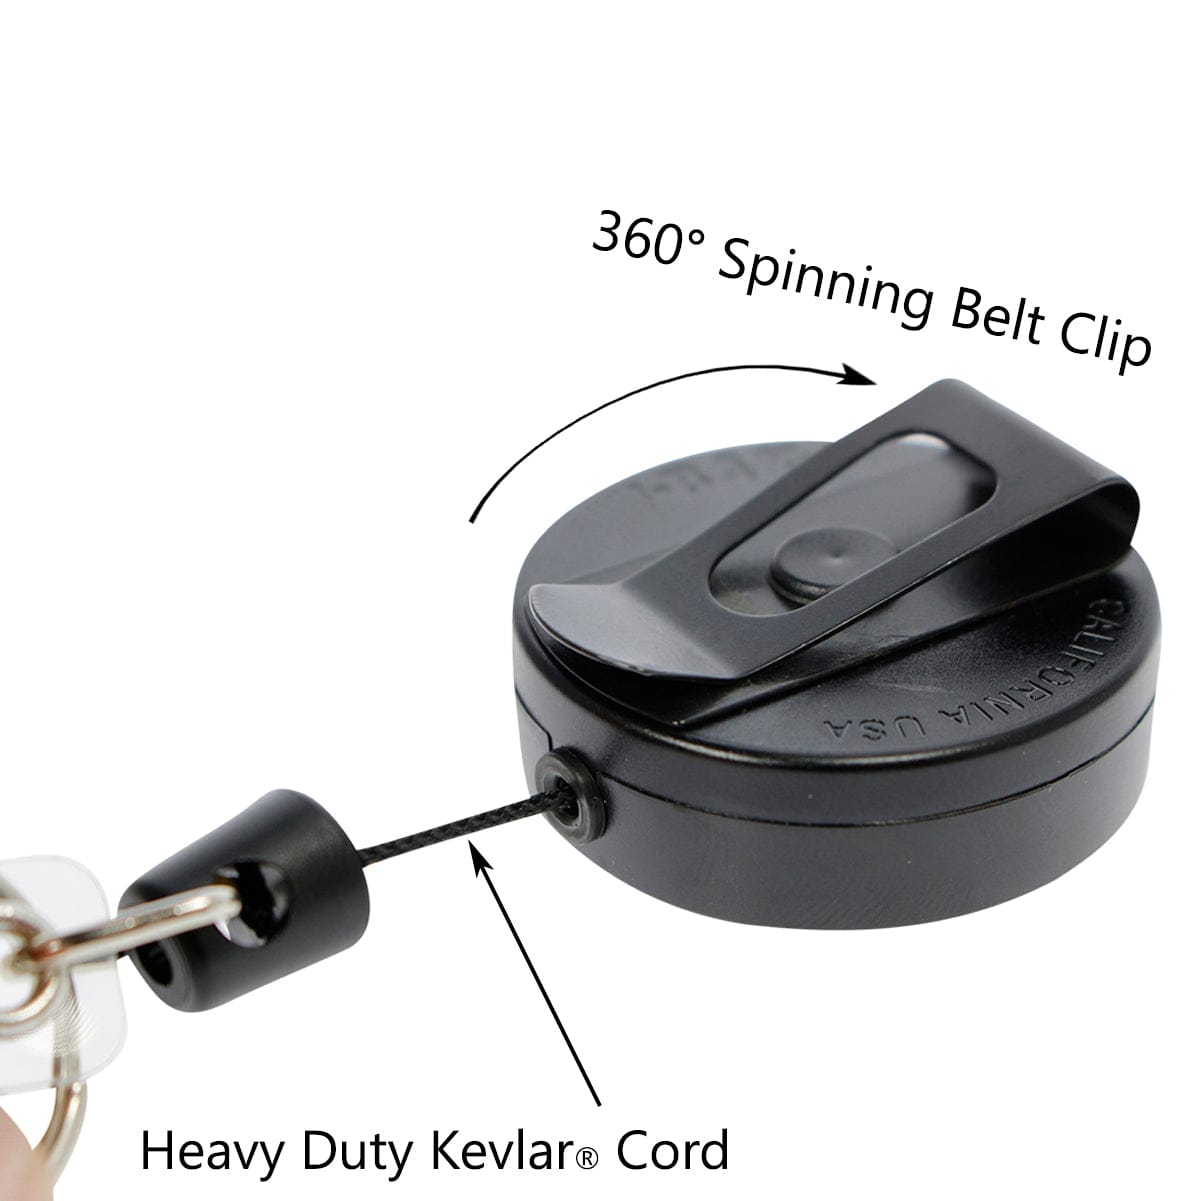 Heavy Duty Badge Reel with Badge Holder & Key Ring, SpecialistID.com